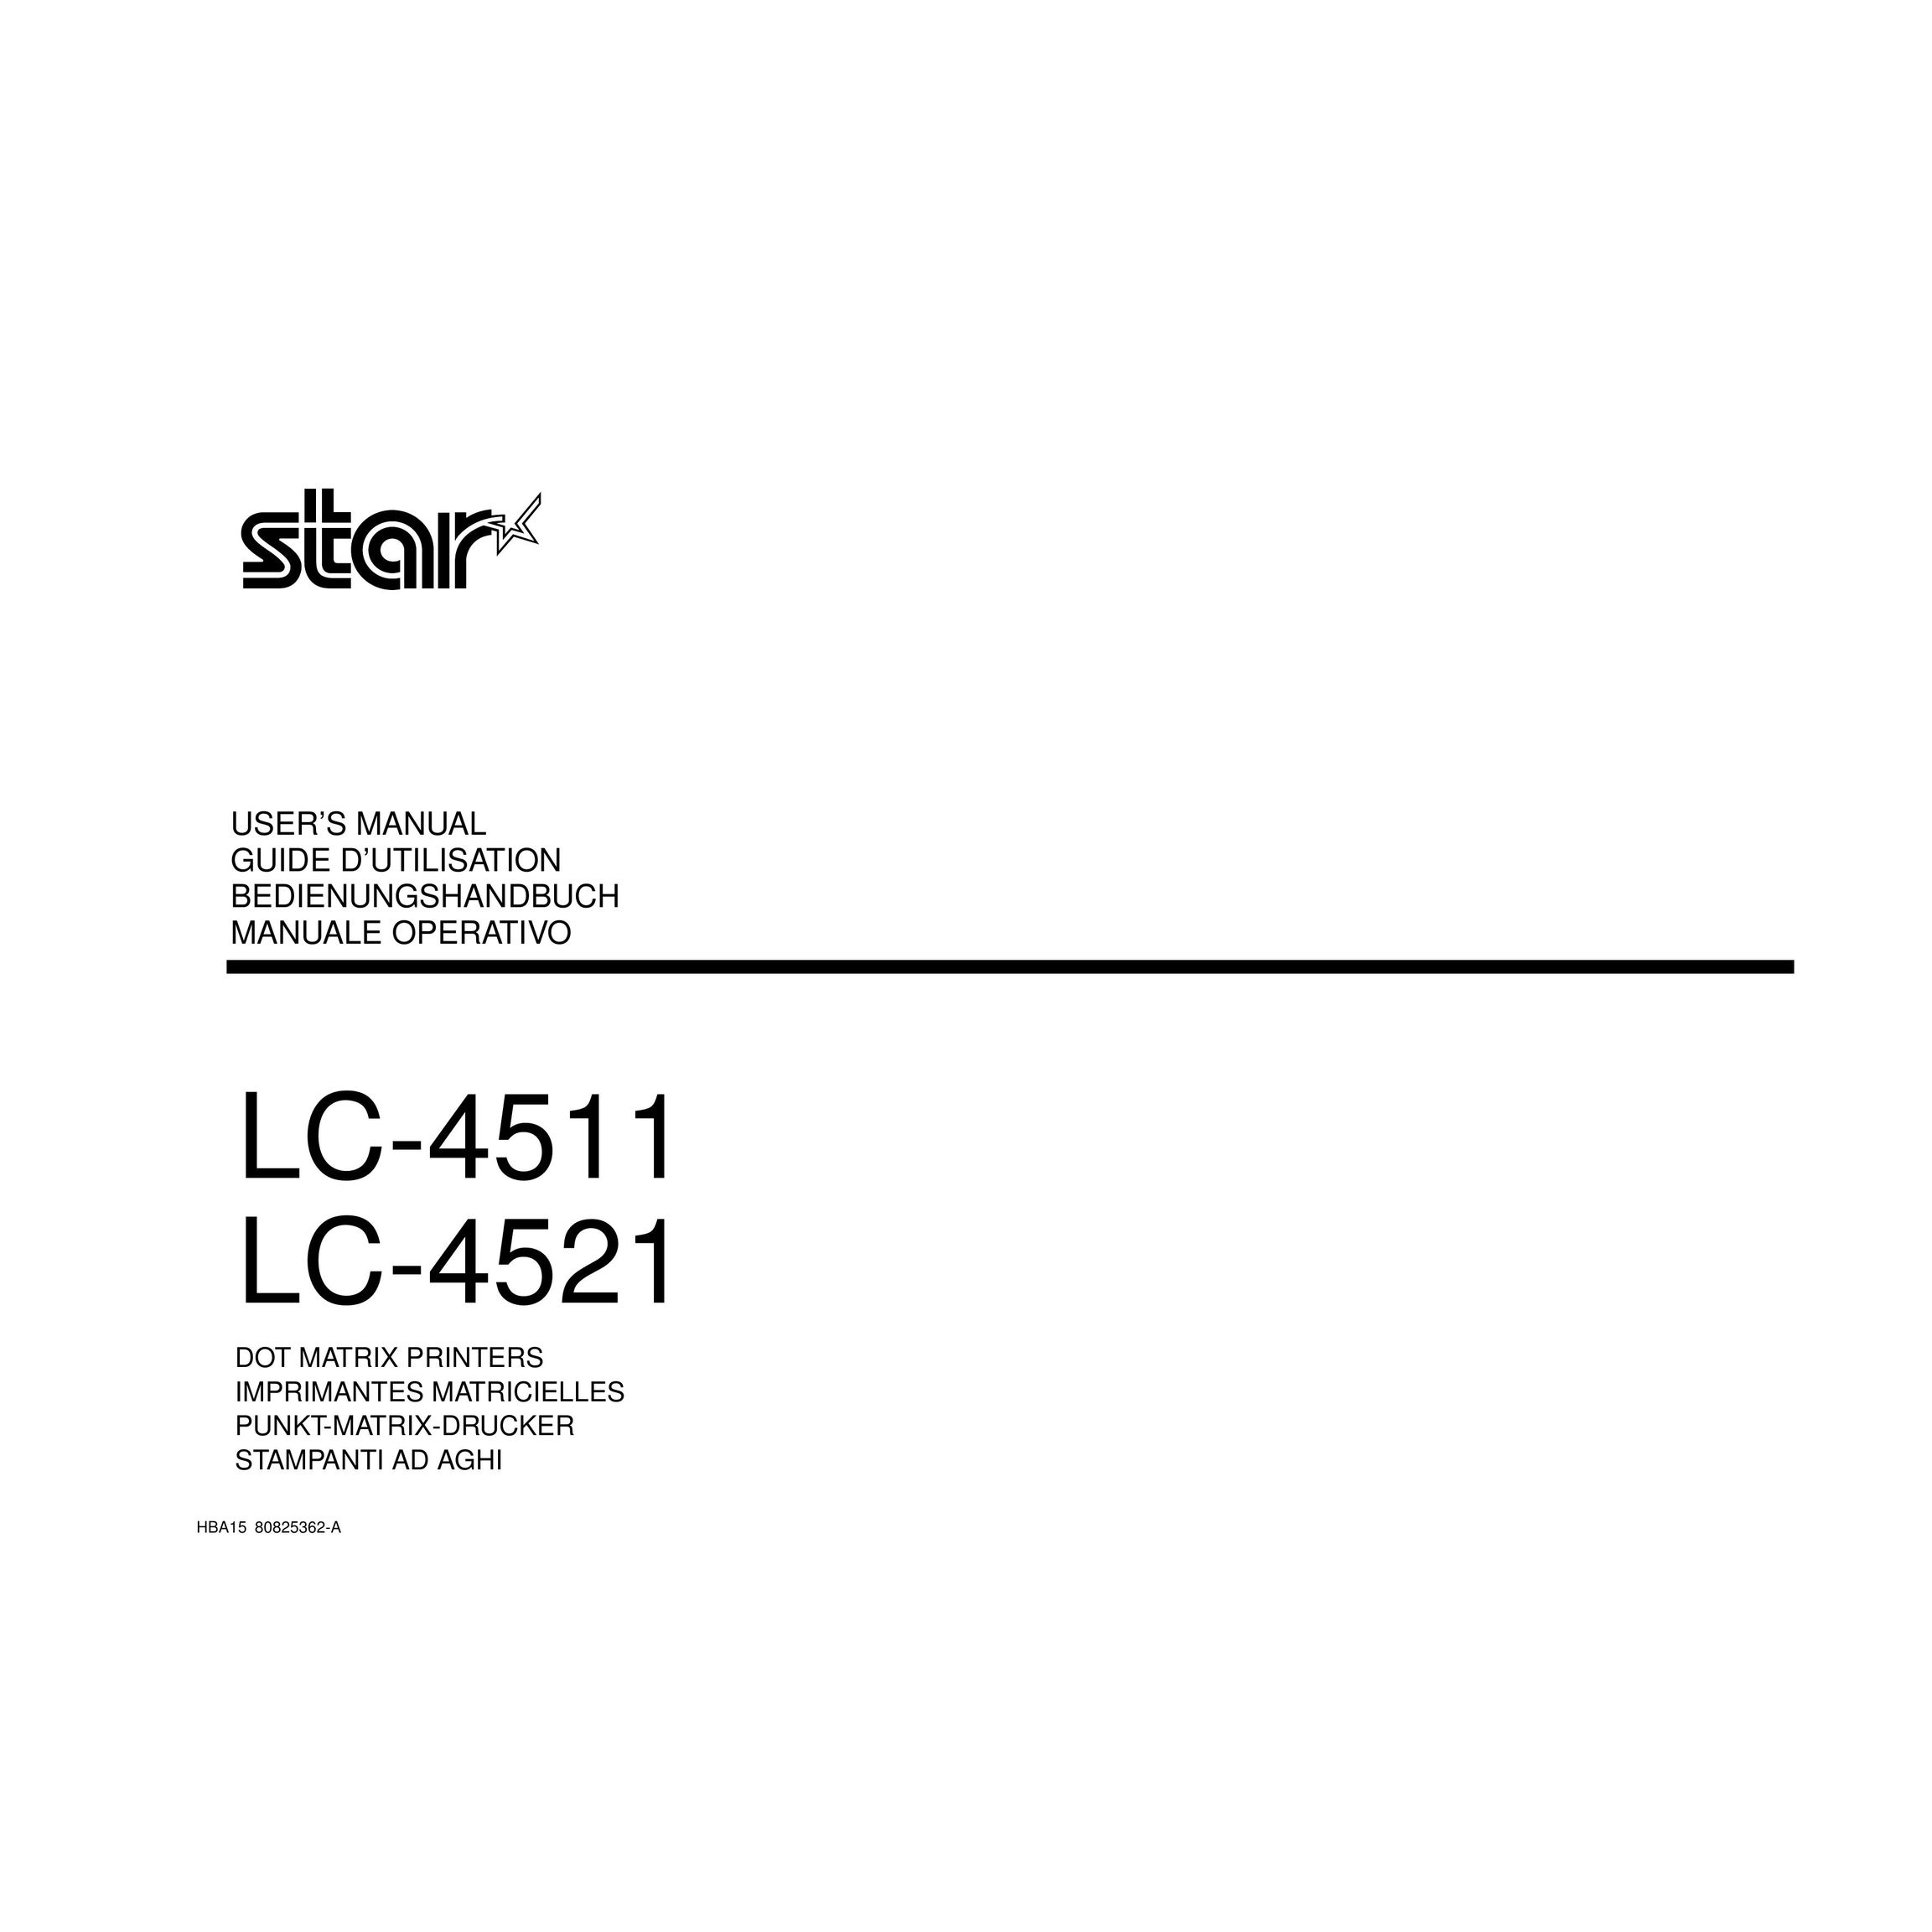 Star Micronics LC-4521 Printer User Manual